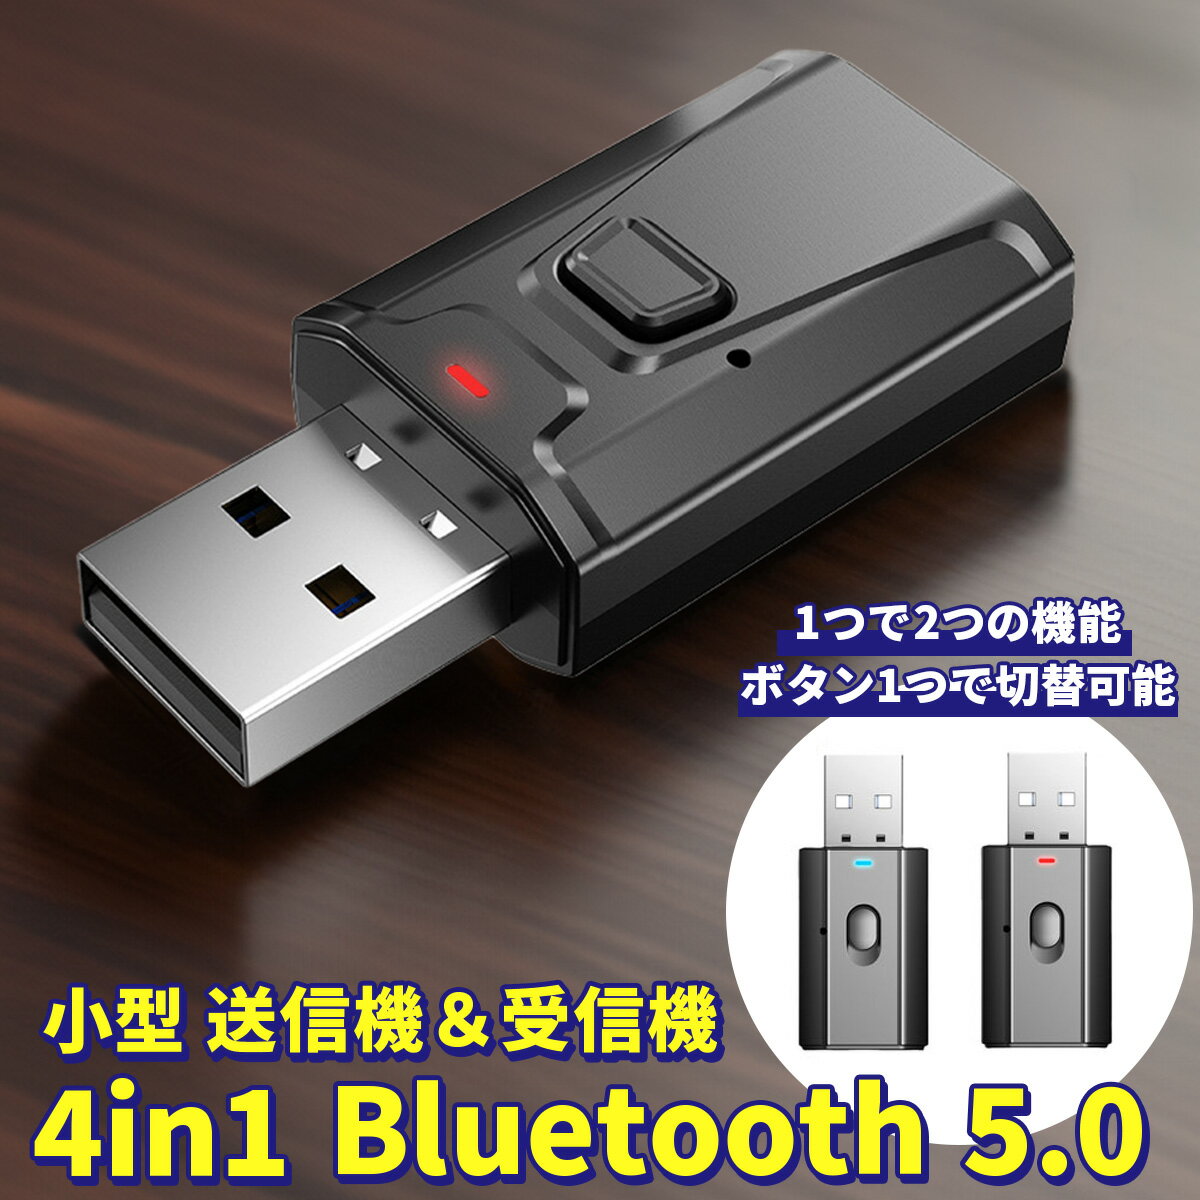 Bluetooth レシーバー 5.0 トランスミッター 送受信機 ブルートゥース 送信機 受信機 小型 アダプター Bluetooth5.0 無線 音声 音楽 テ..